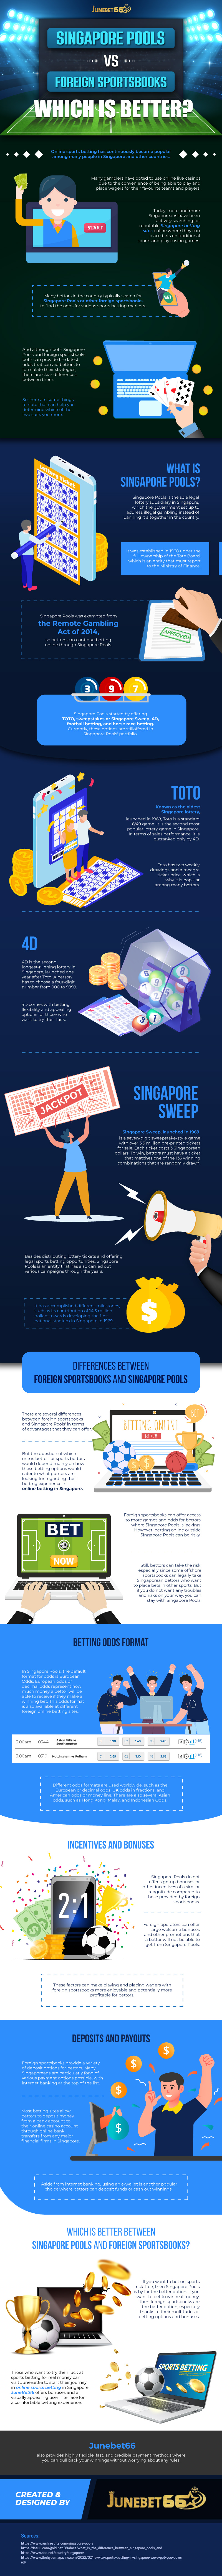 Pools Singapura vs Sportsbook Asing junbet66